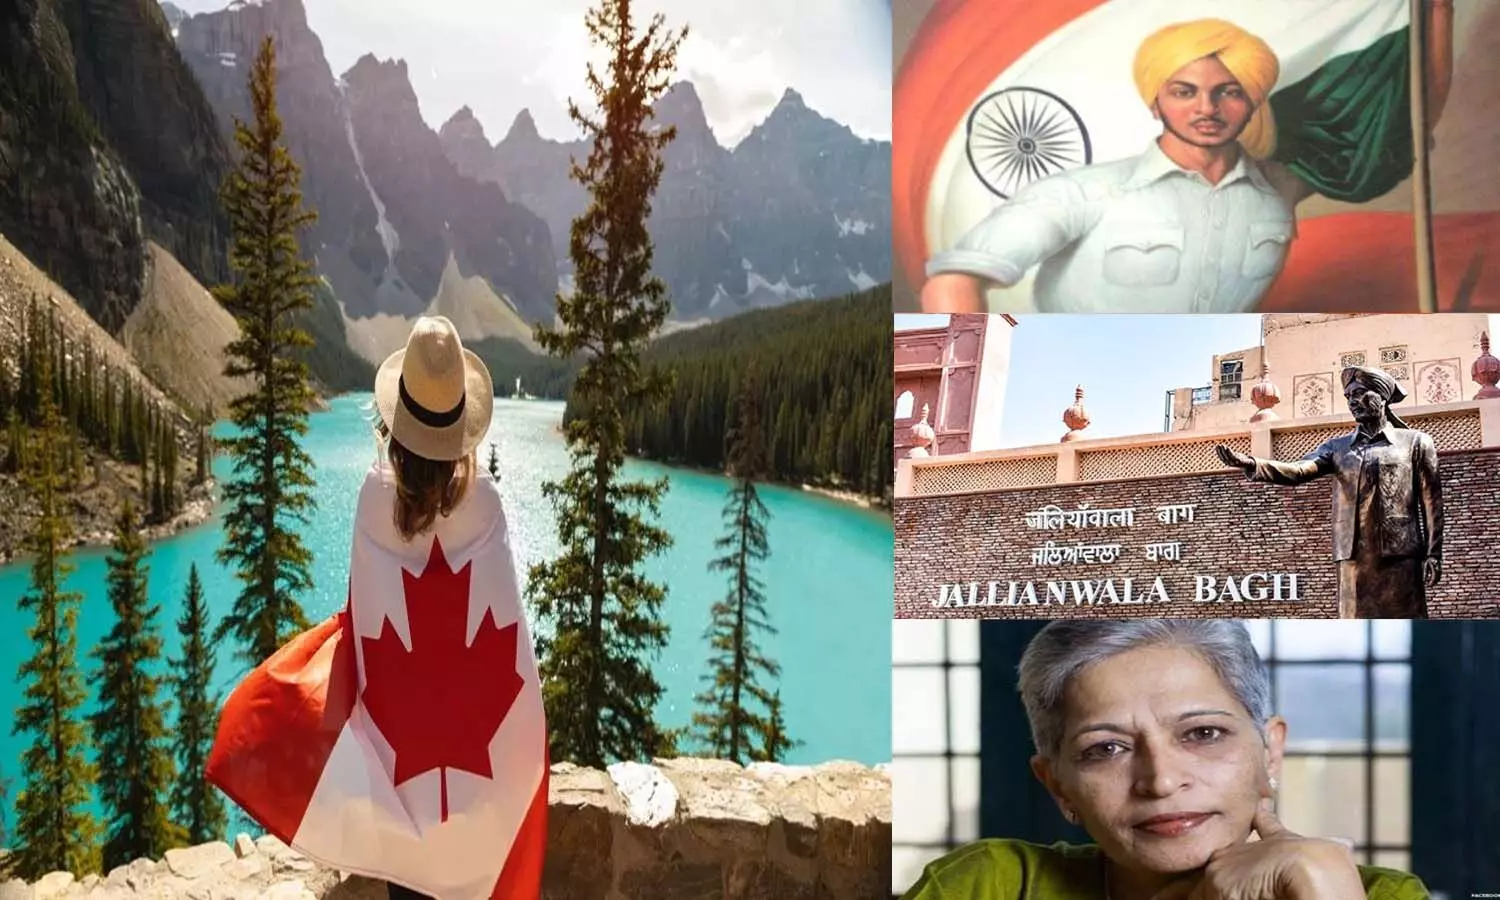 Canada remembers Bhagat Singh, Jallianwala Bagh and Gauri Lankesh